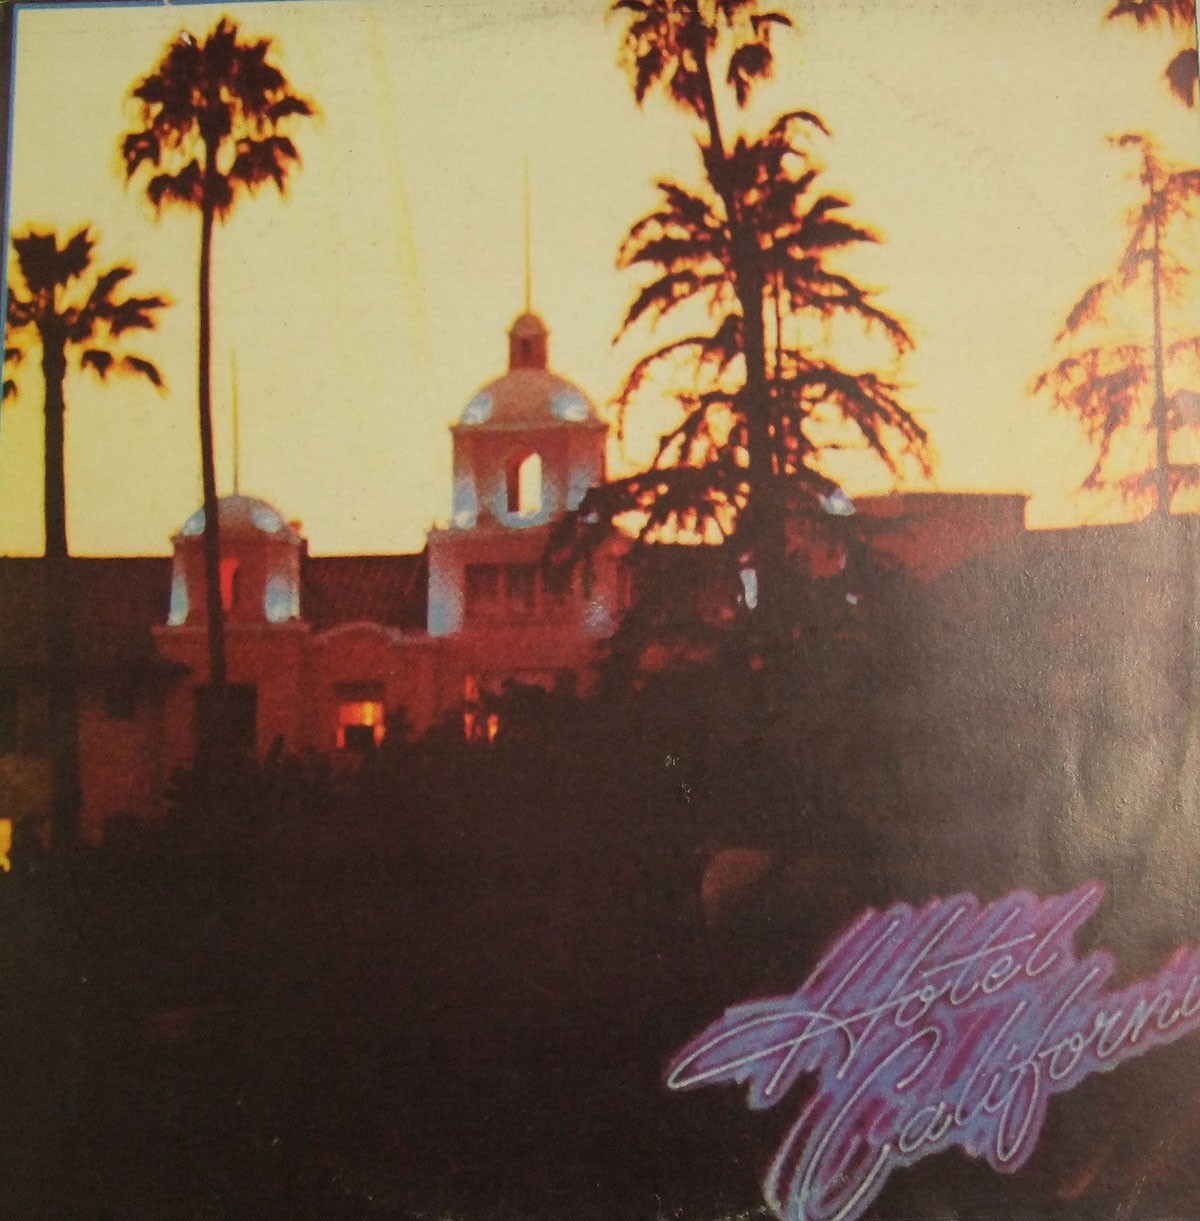 oblozhka alboma eagles hotel kalifornien